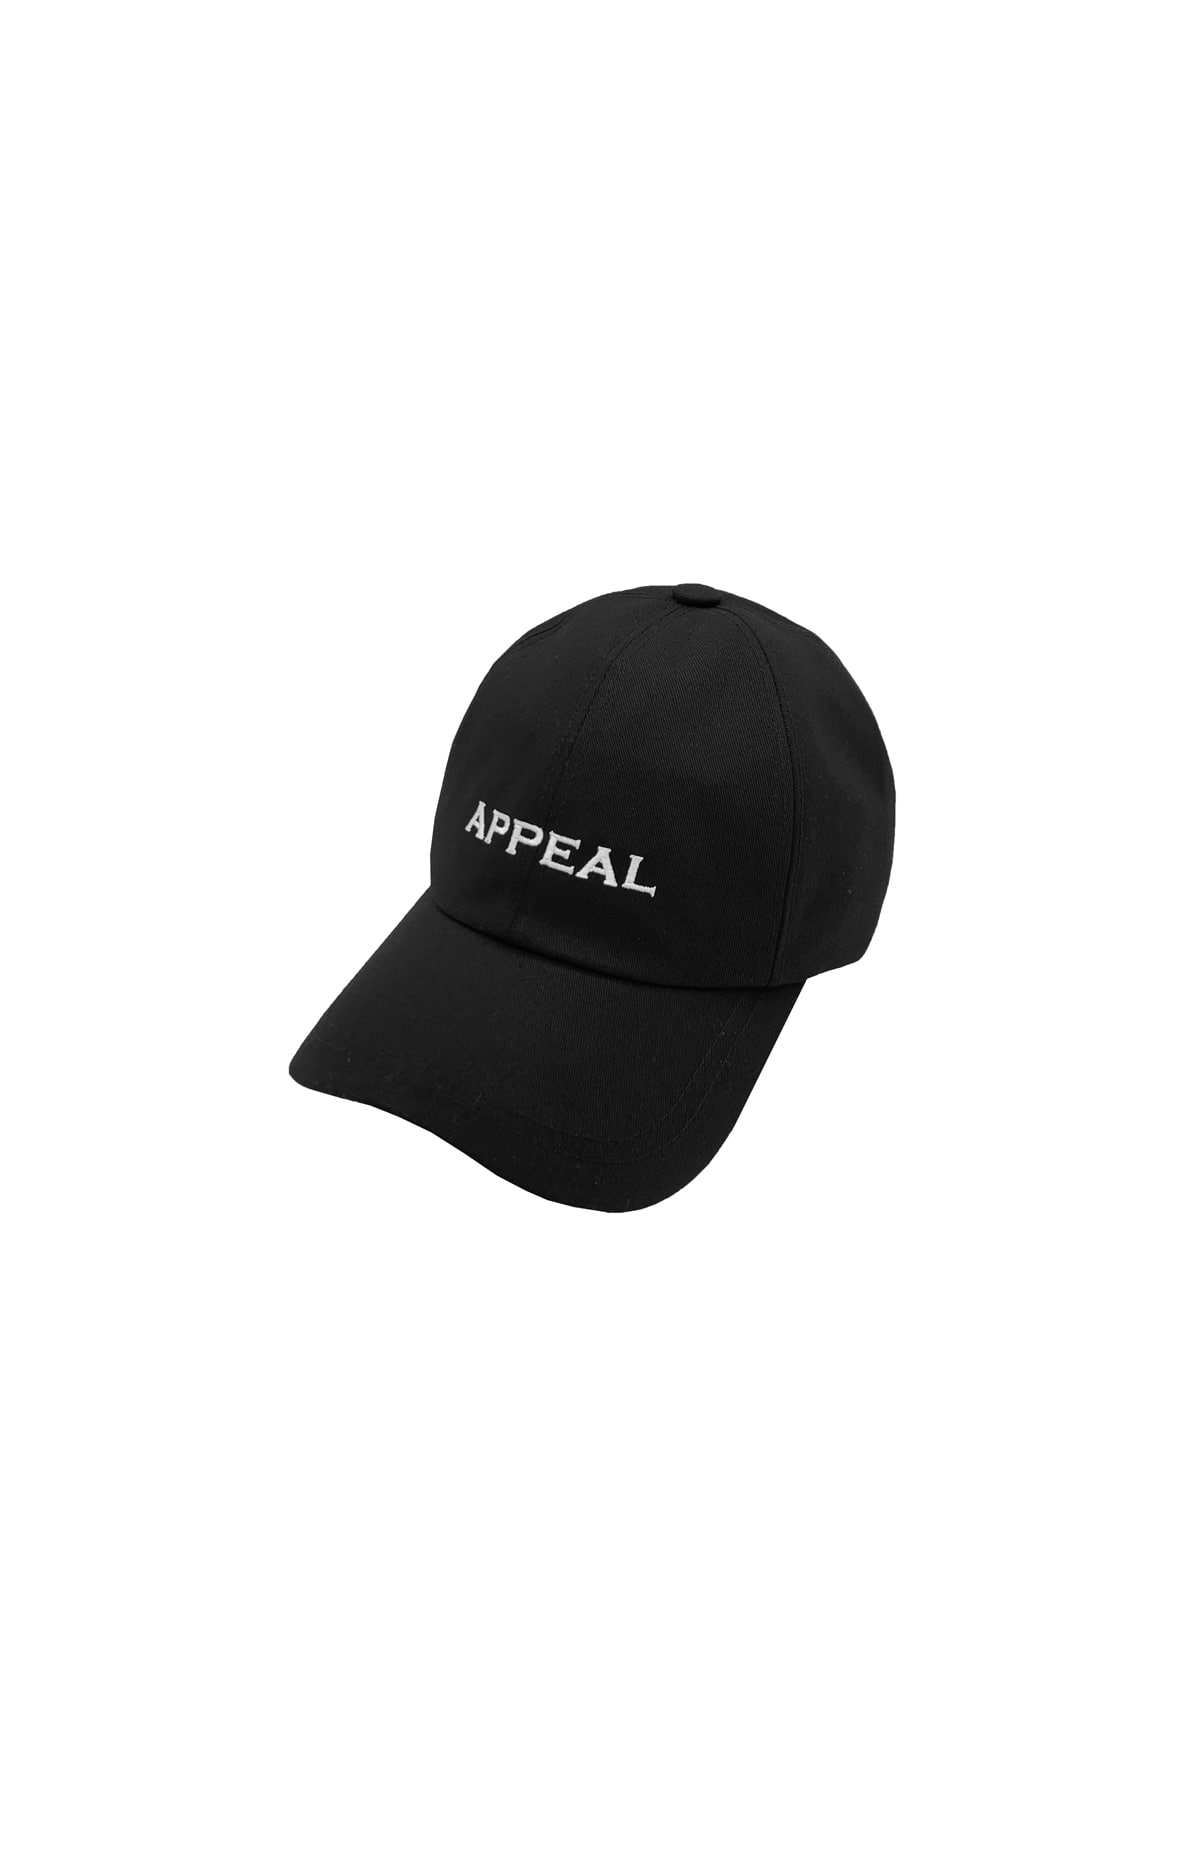 APPEAL BALL CAP (BLACK)